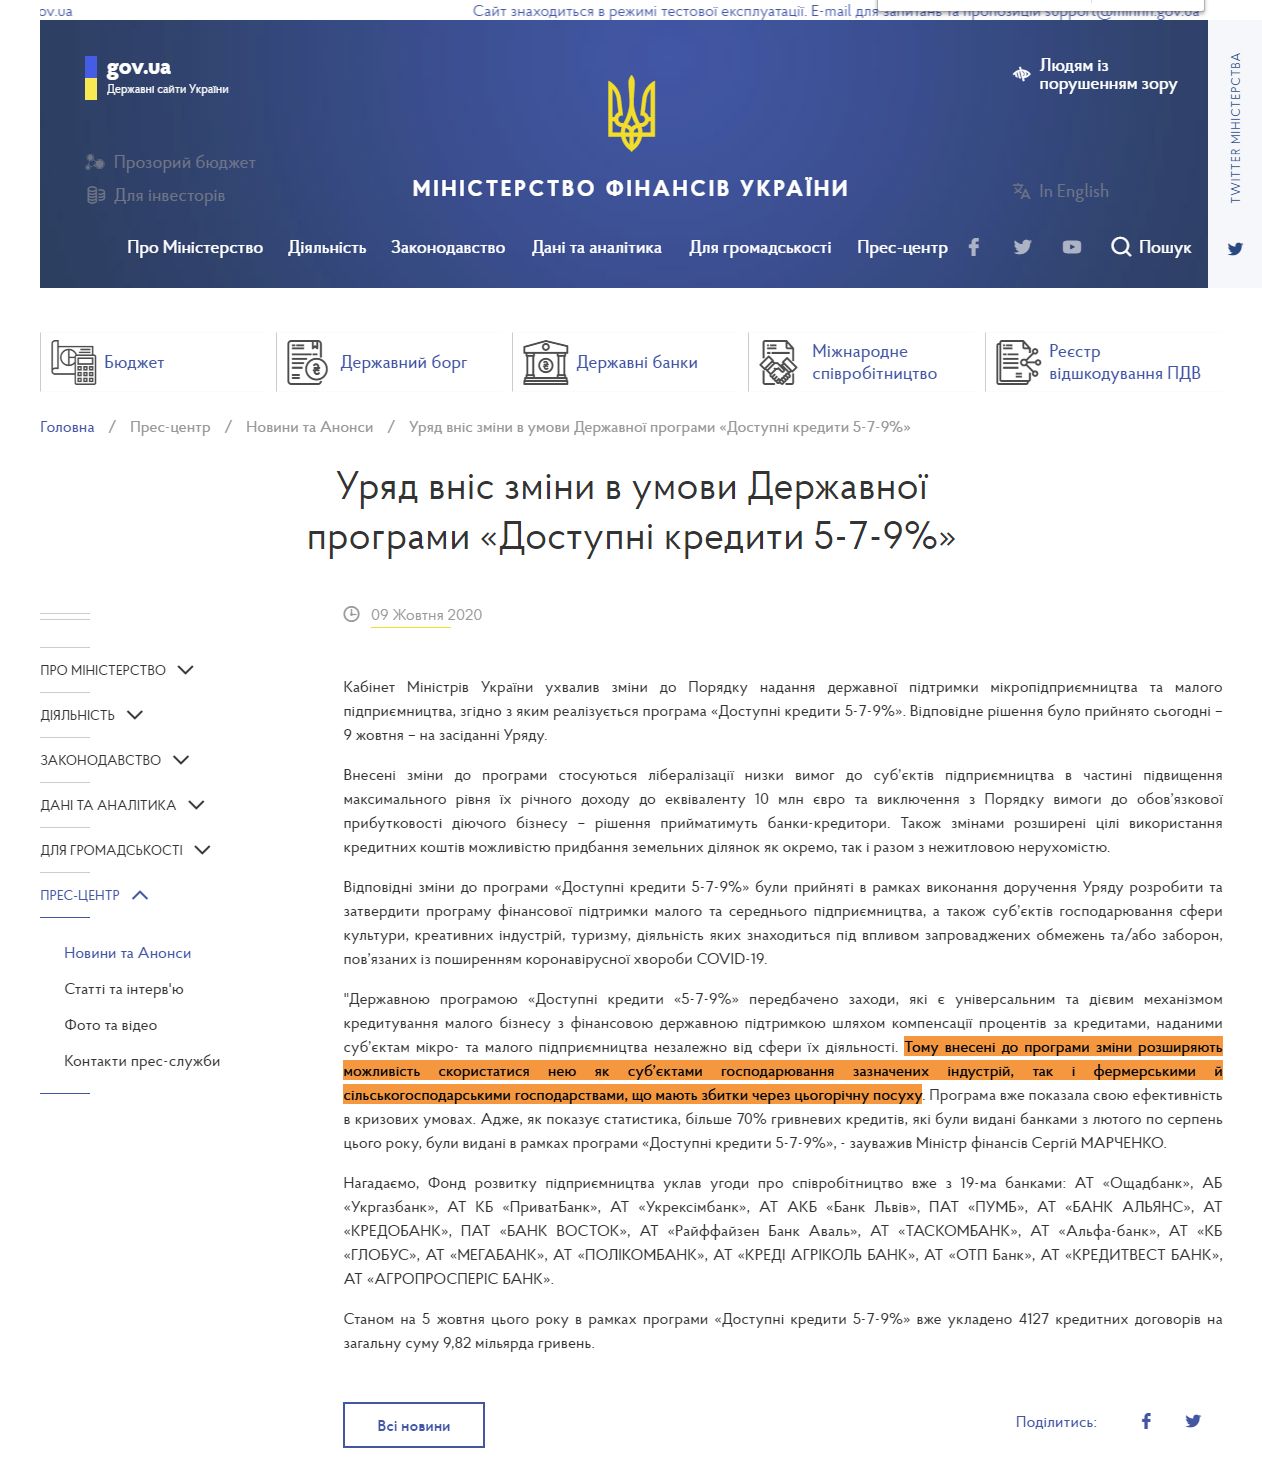 https://mof.gov.ua/uk/news/uriad_vnis_zmini_v_umovi_derzhavnoi_programi_dostupni_krediti_5-7-9-2477